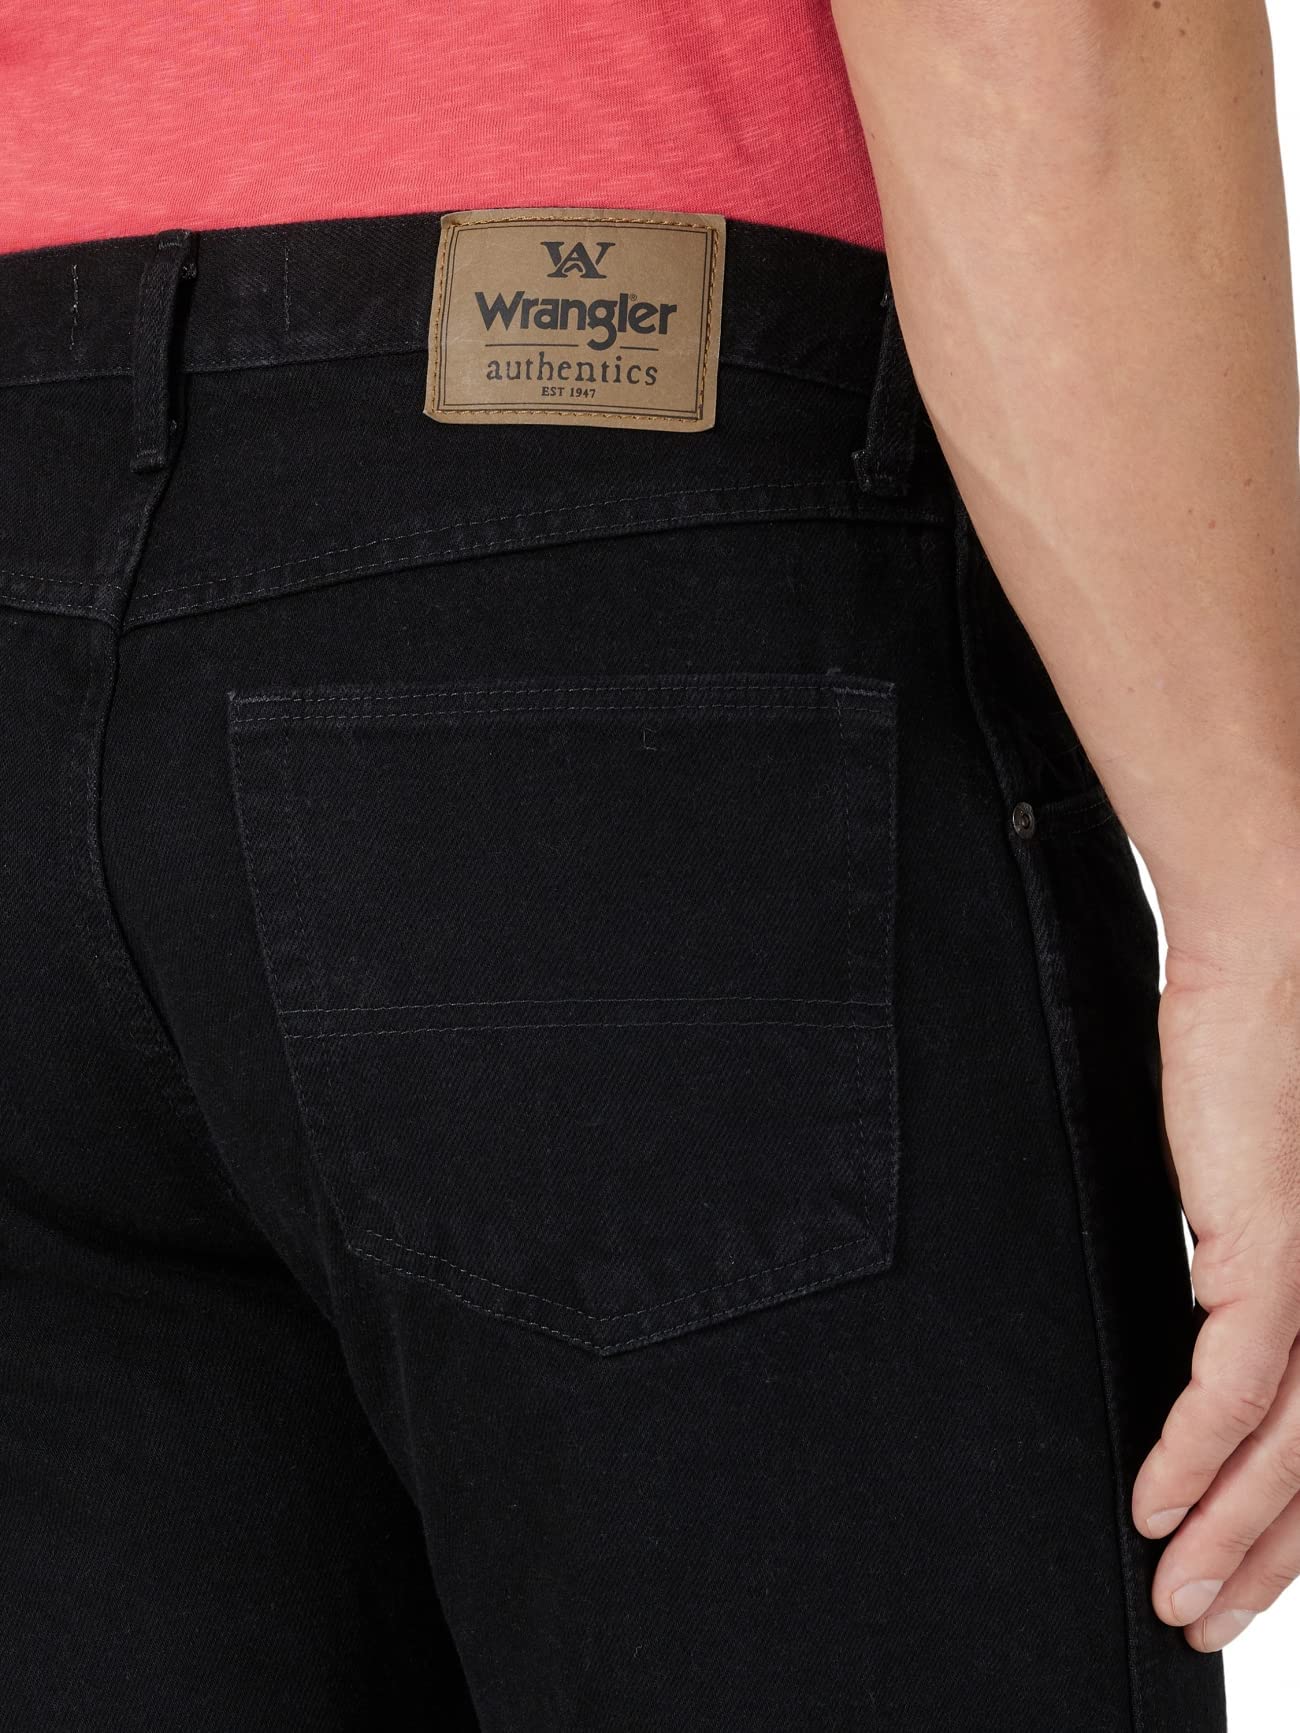 Wrangler Authentics Men's Big & Tall Classic 5-Pocket Regular Fit Cotton Jean, Black, 44W x 30L